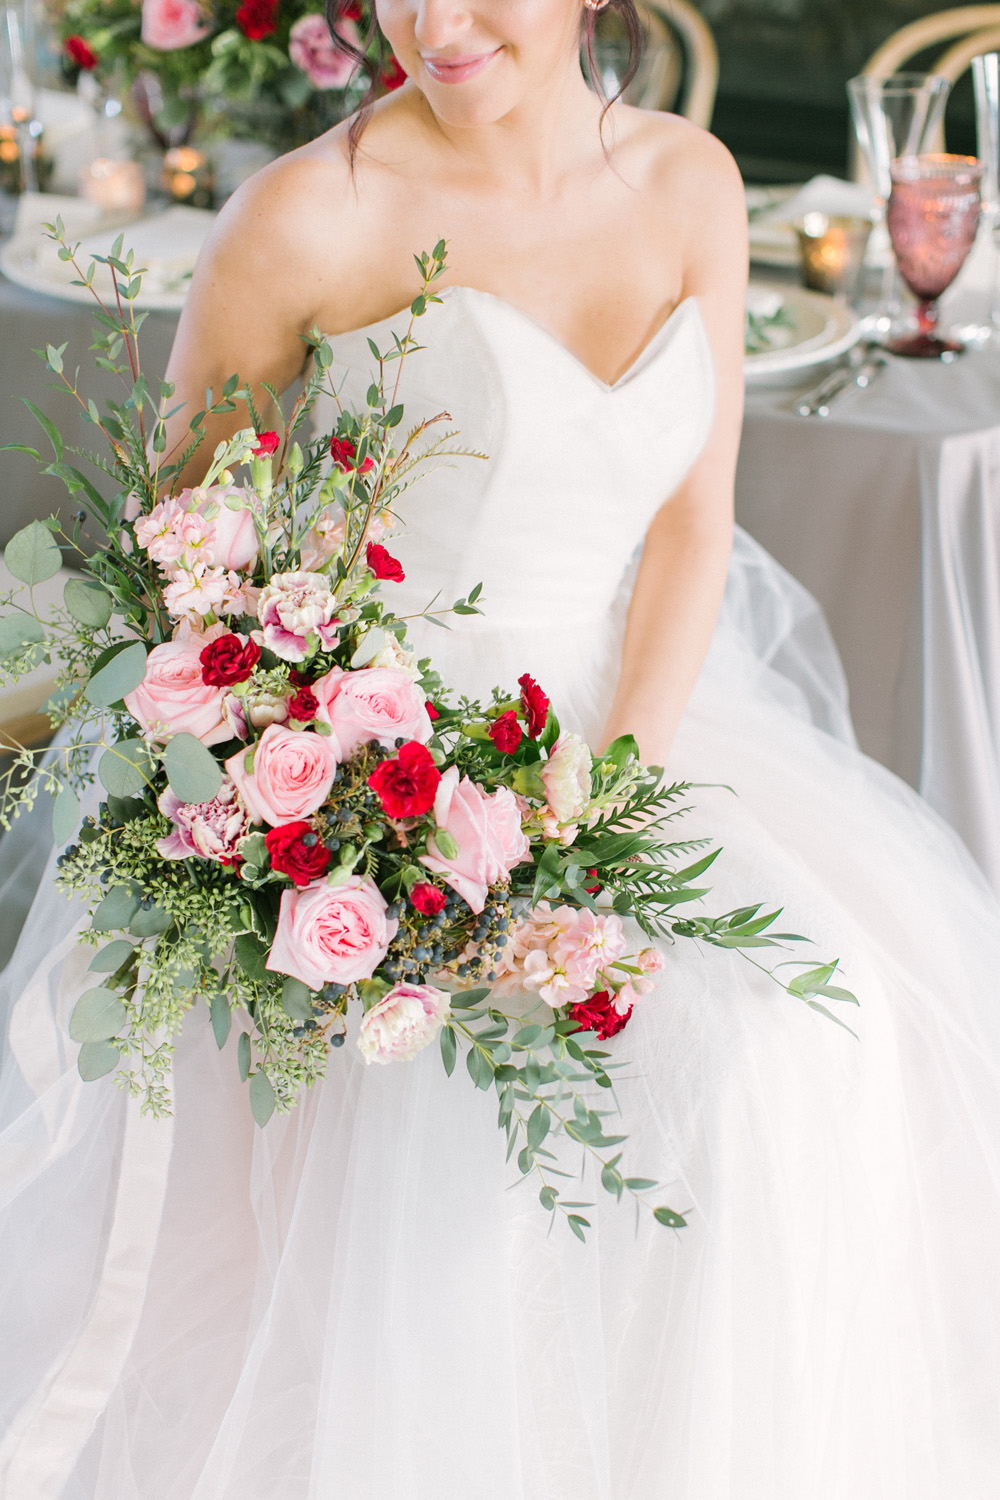 KJ-and-Co-Wedding-Planner-Vineyard-Bride-Photography-by-Elizabeth-in-Love-041.jpg